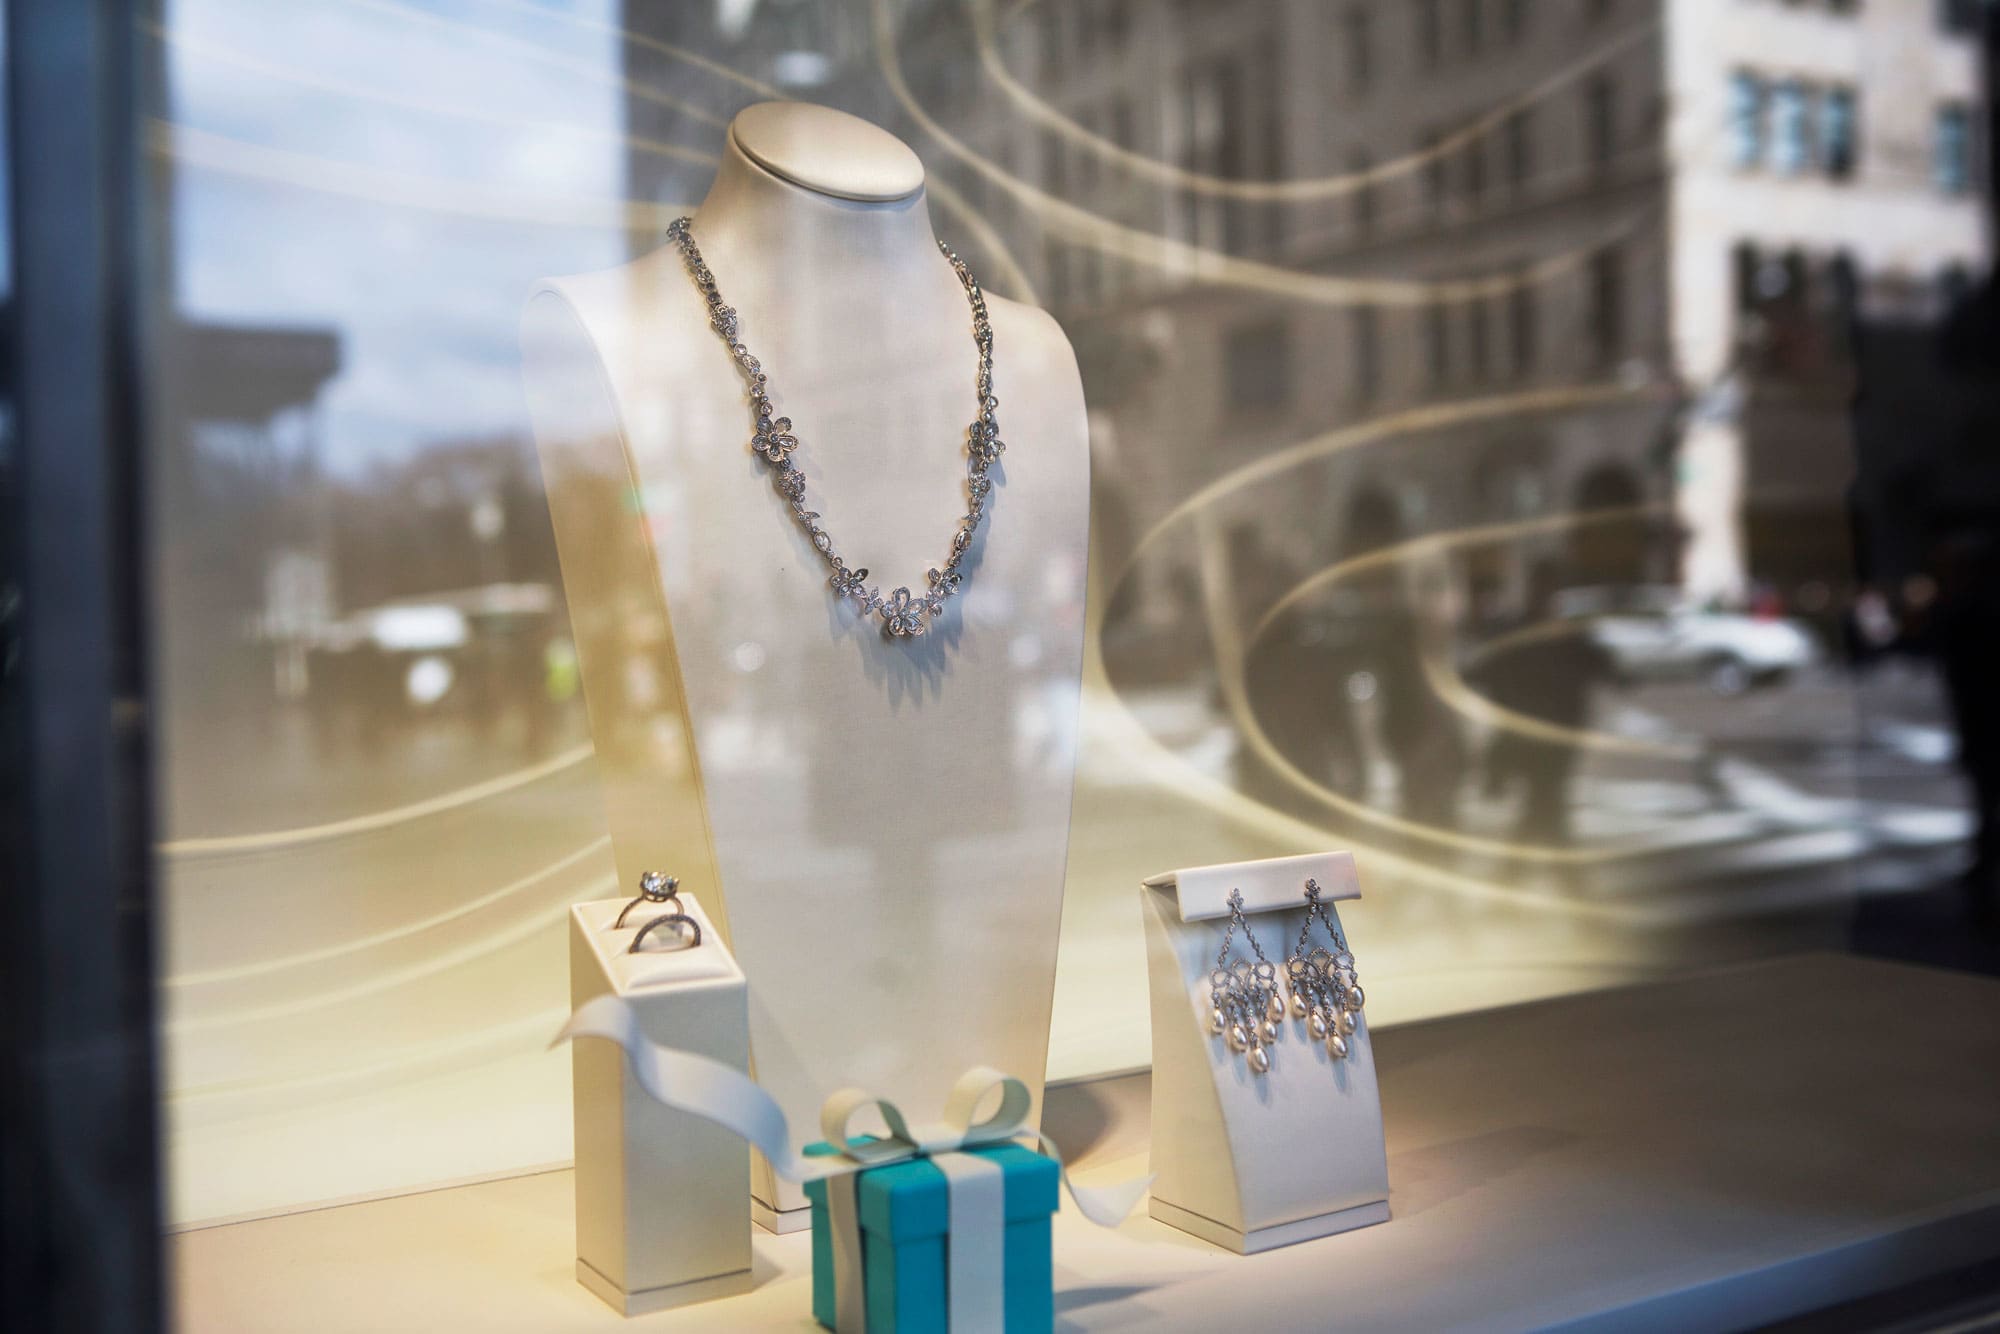 Luxury jeweler Tiffany's comparable 